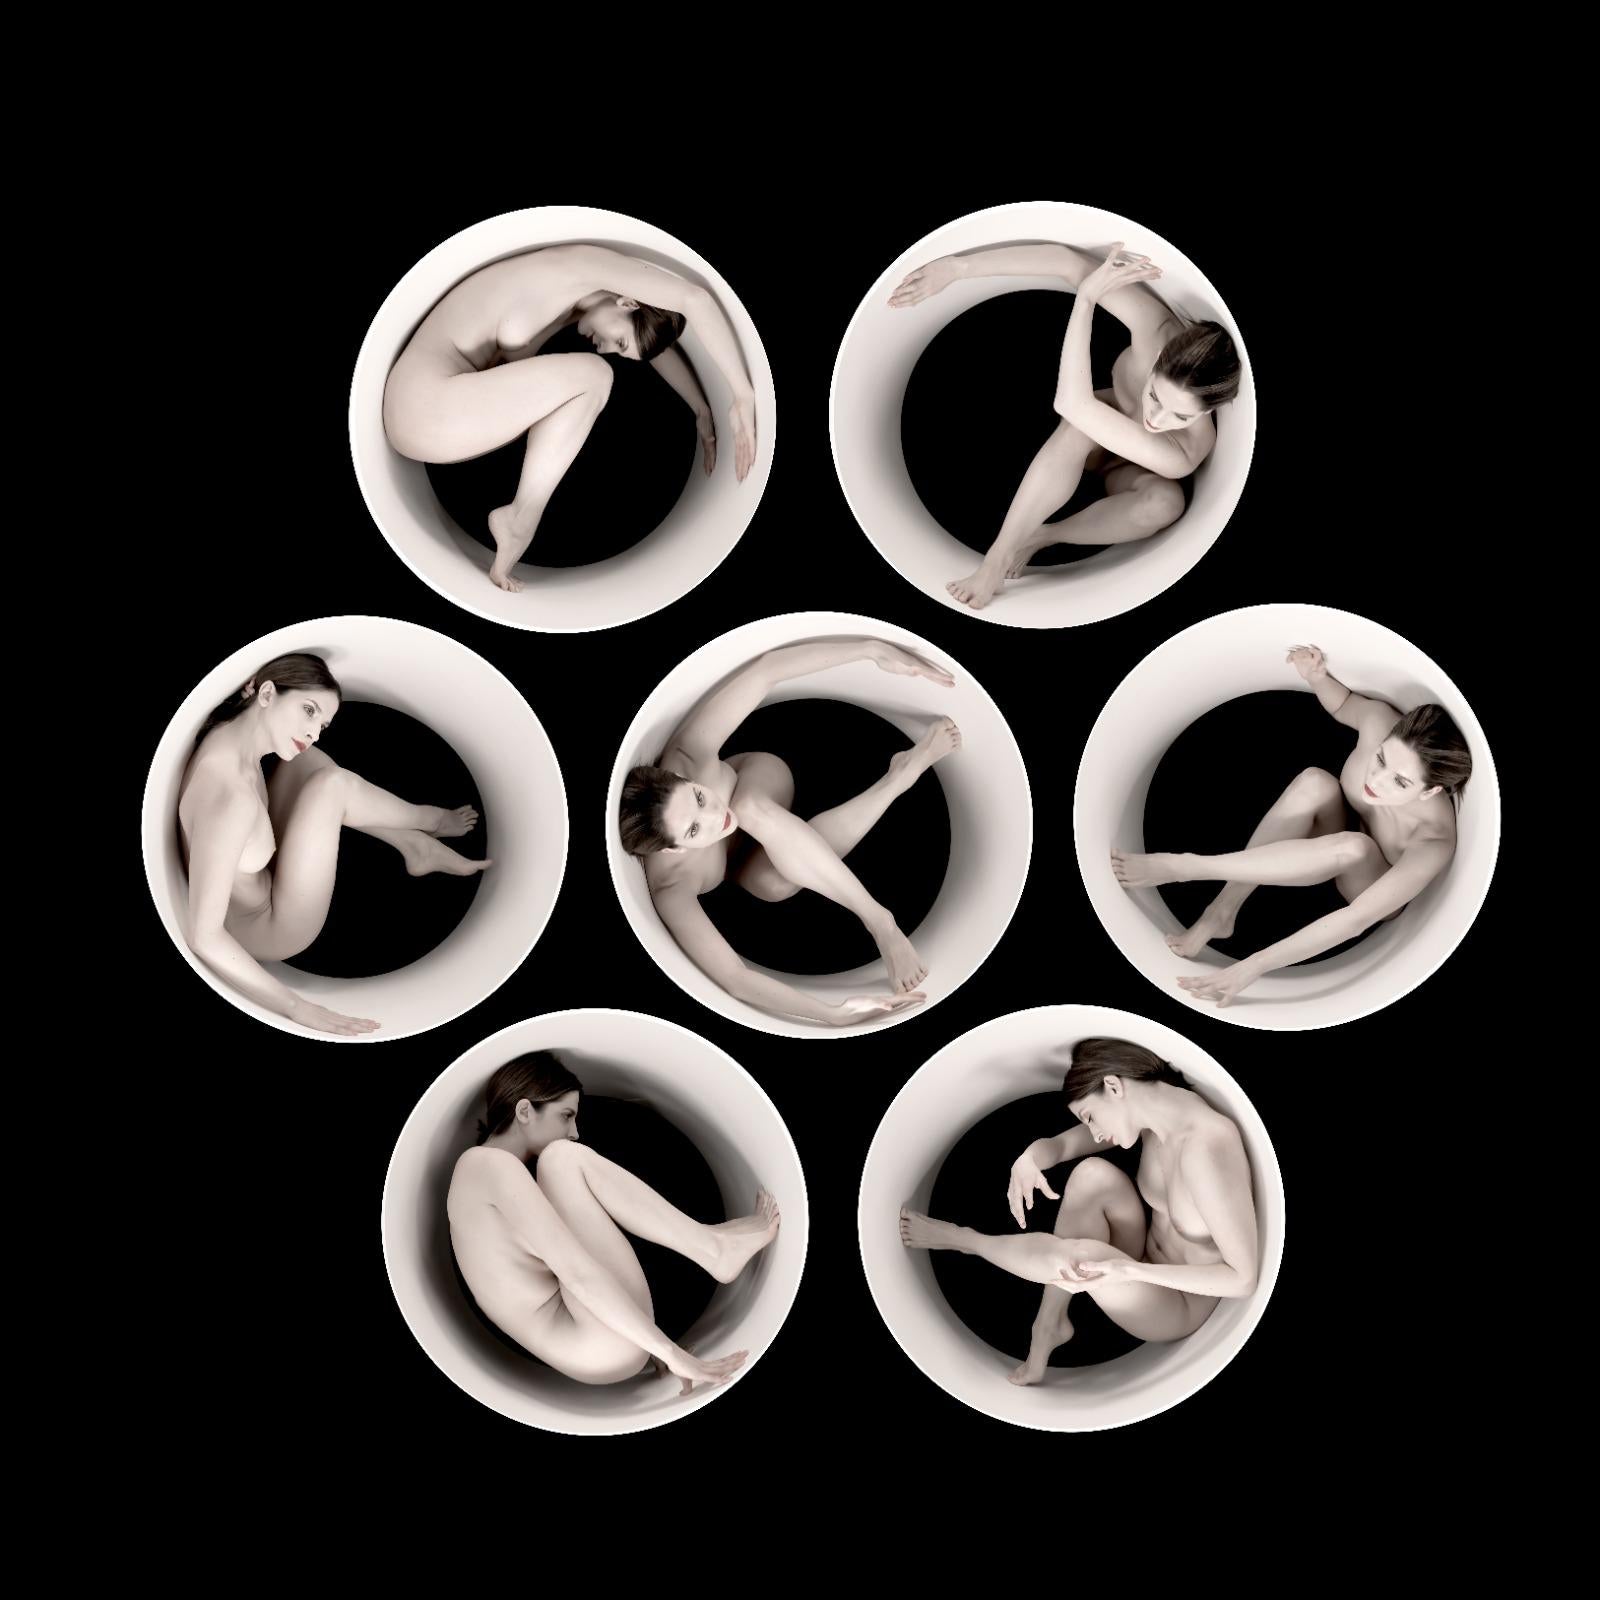 Jeff Robb Figurative Photograph – "Cir2" 3-D Lenticular Schwarz-Weiß figuratives Aktfoto gerahmt, Contemporary